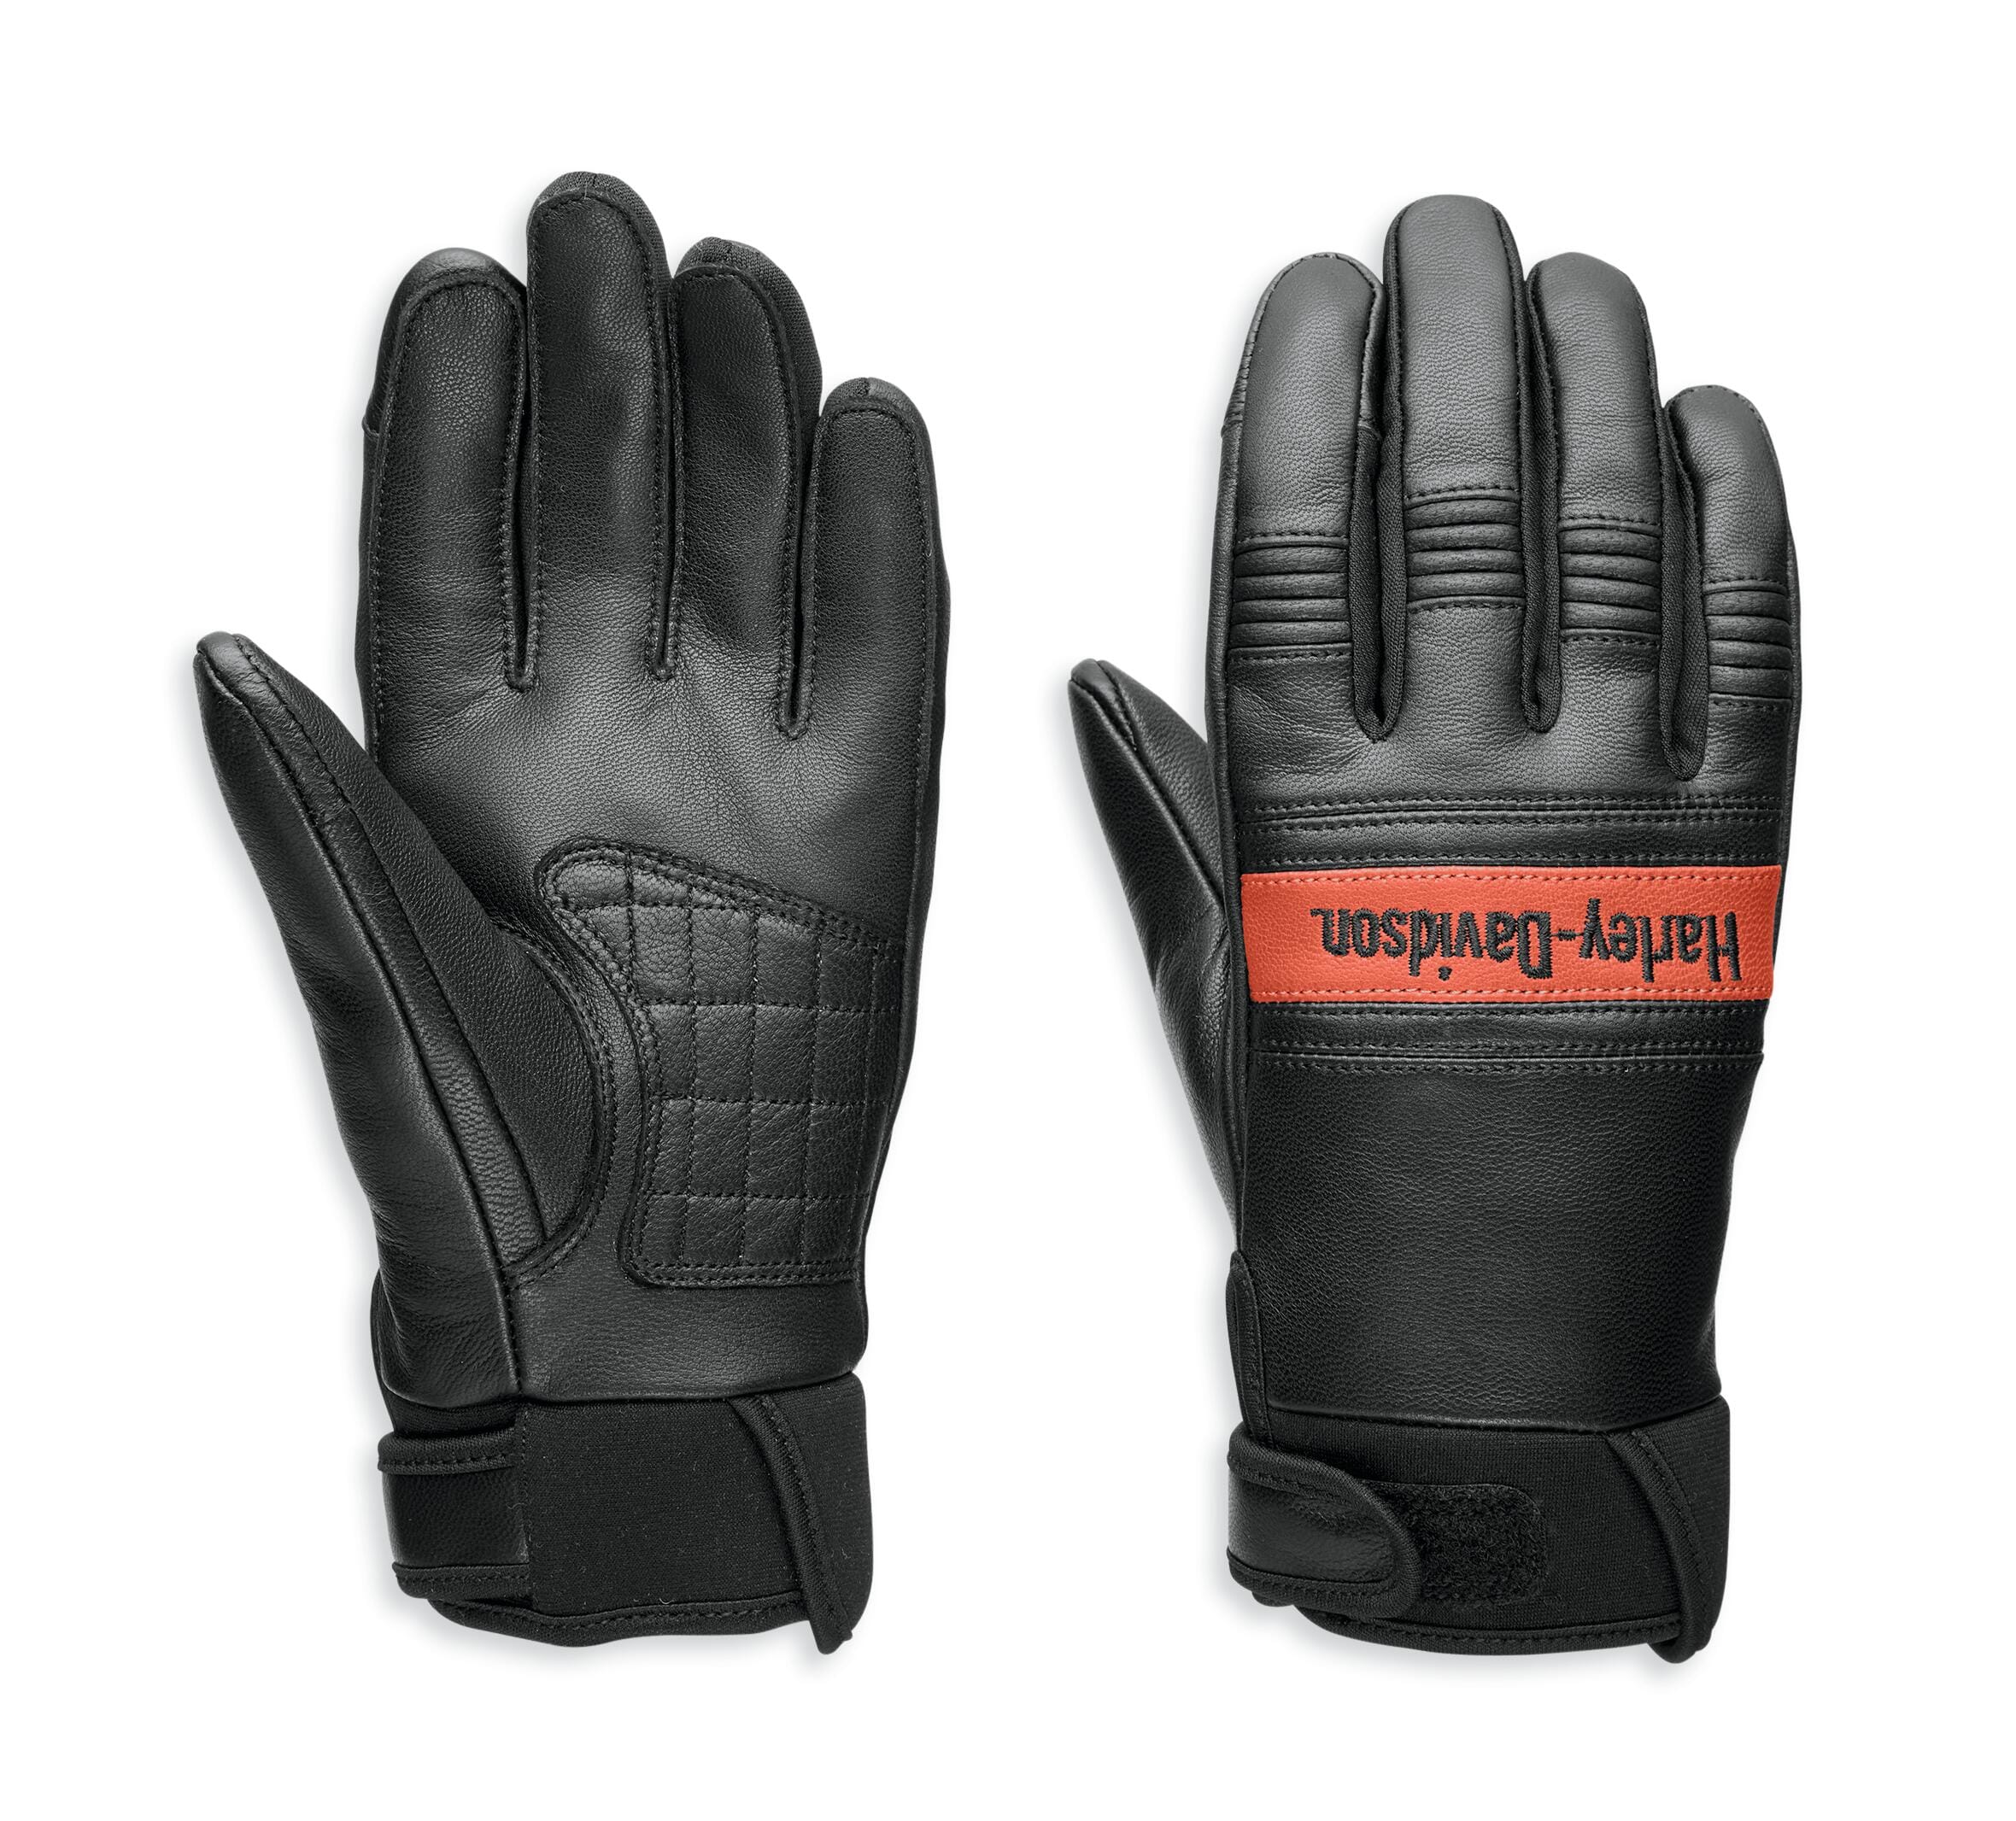 Harley-Davidson Women's Ovation Leather Gloves, Black - 97141-23VW